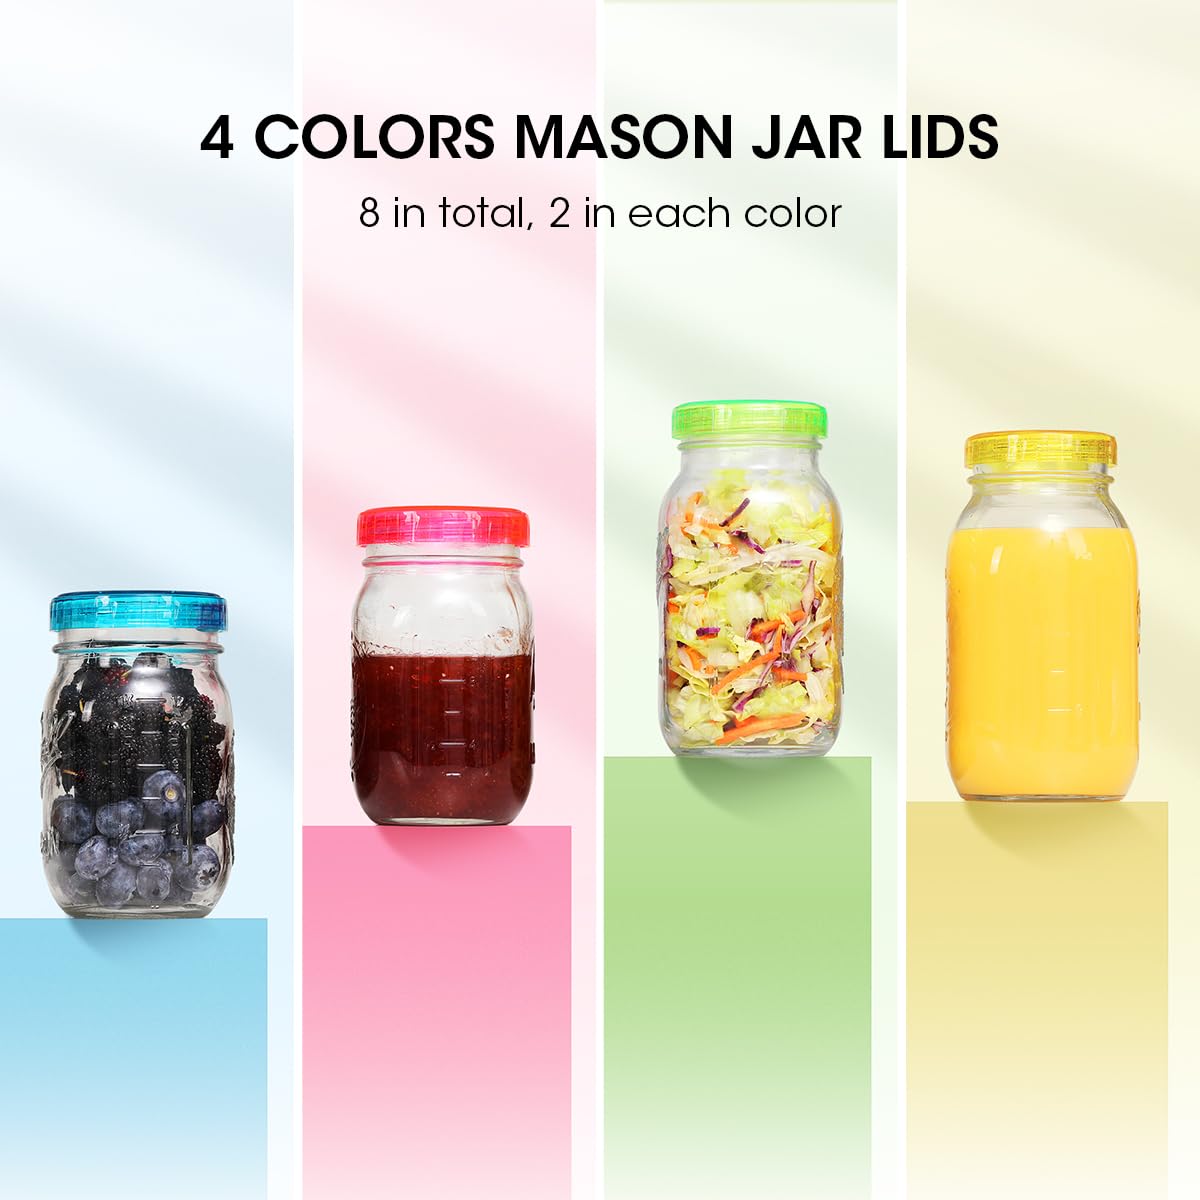 4 colors manson jar lids: Blue, Pink, Green, Yellow